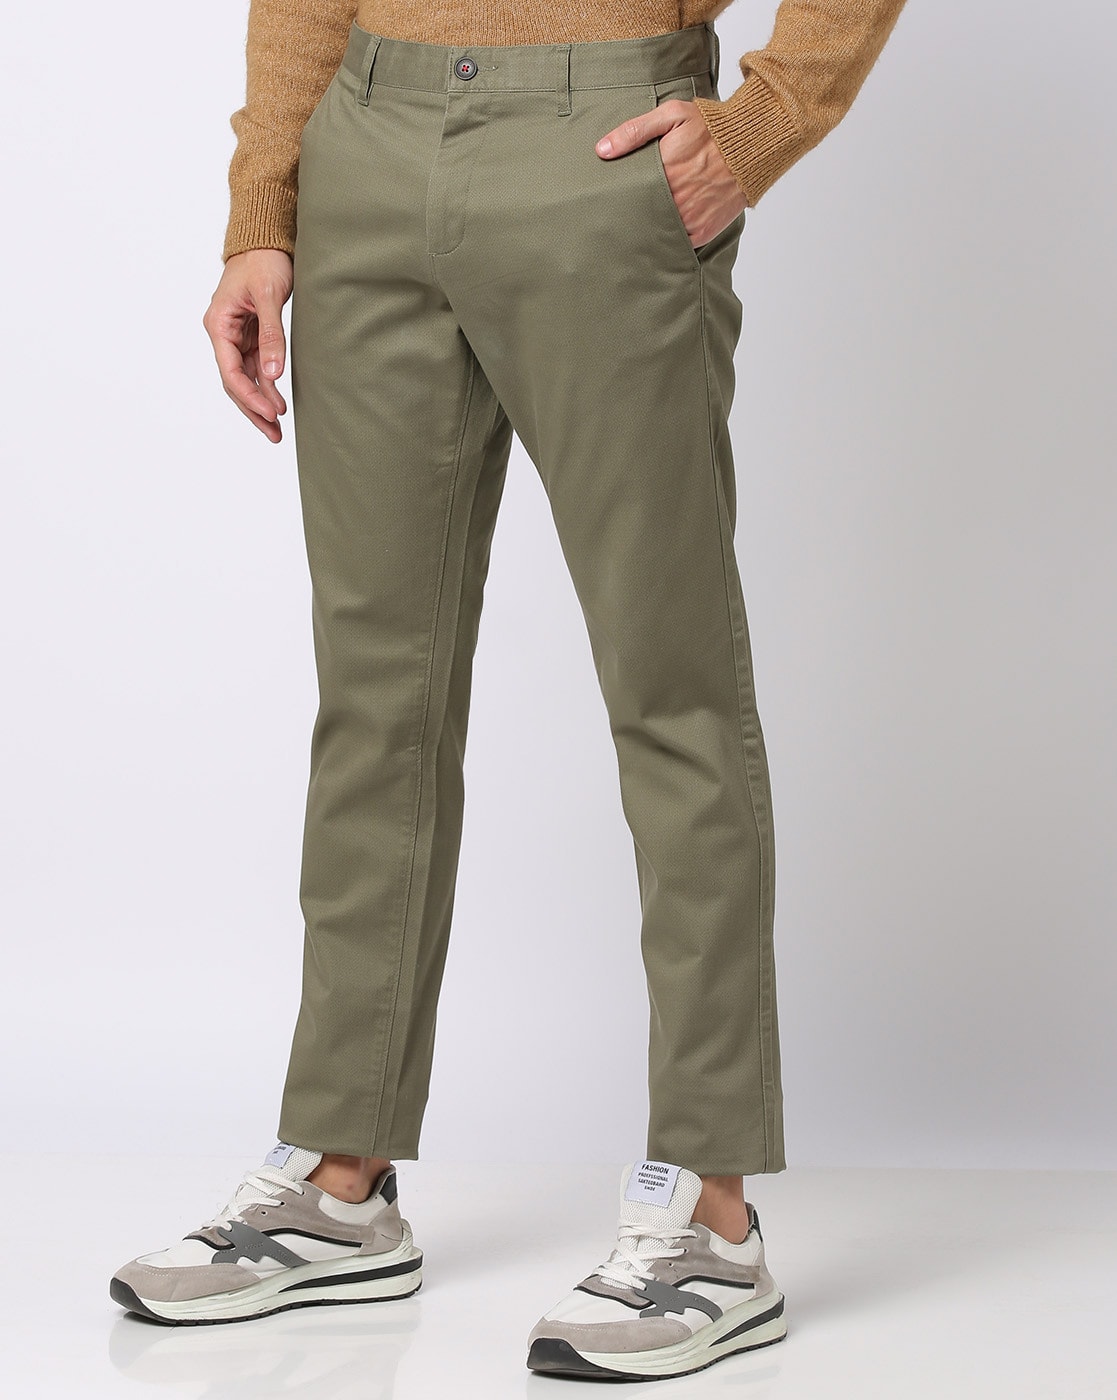 Khaki Wide Leg Cargo Trousers | Trousers | Green cargo pants outfit, Cargo  pants women, High waisted cargo pants